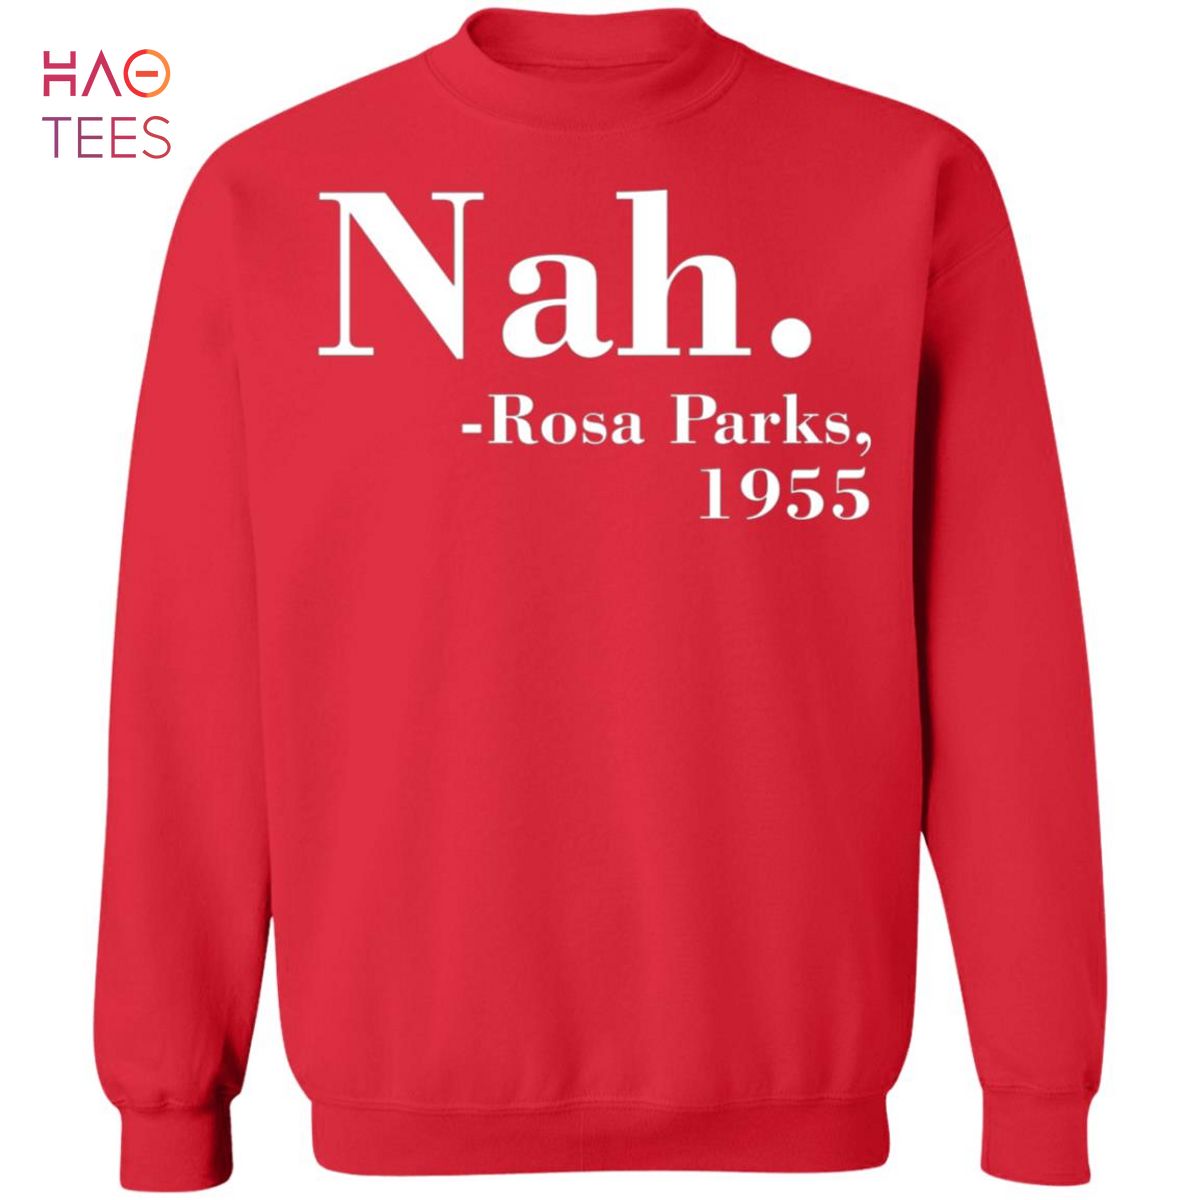 [NEW] Nah Rosa Parks Sweater